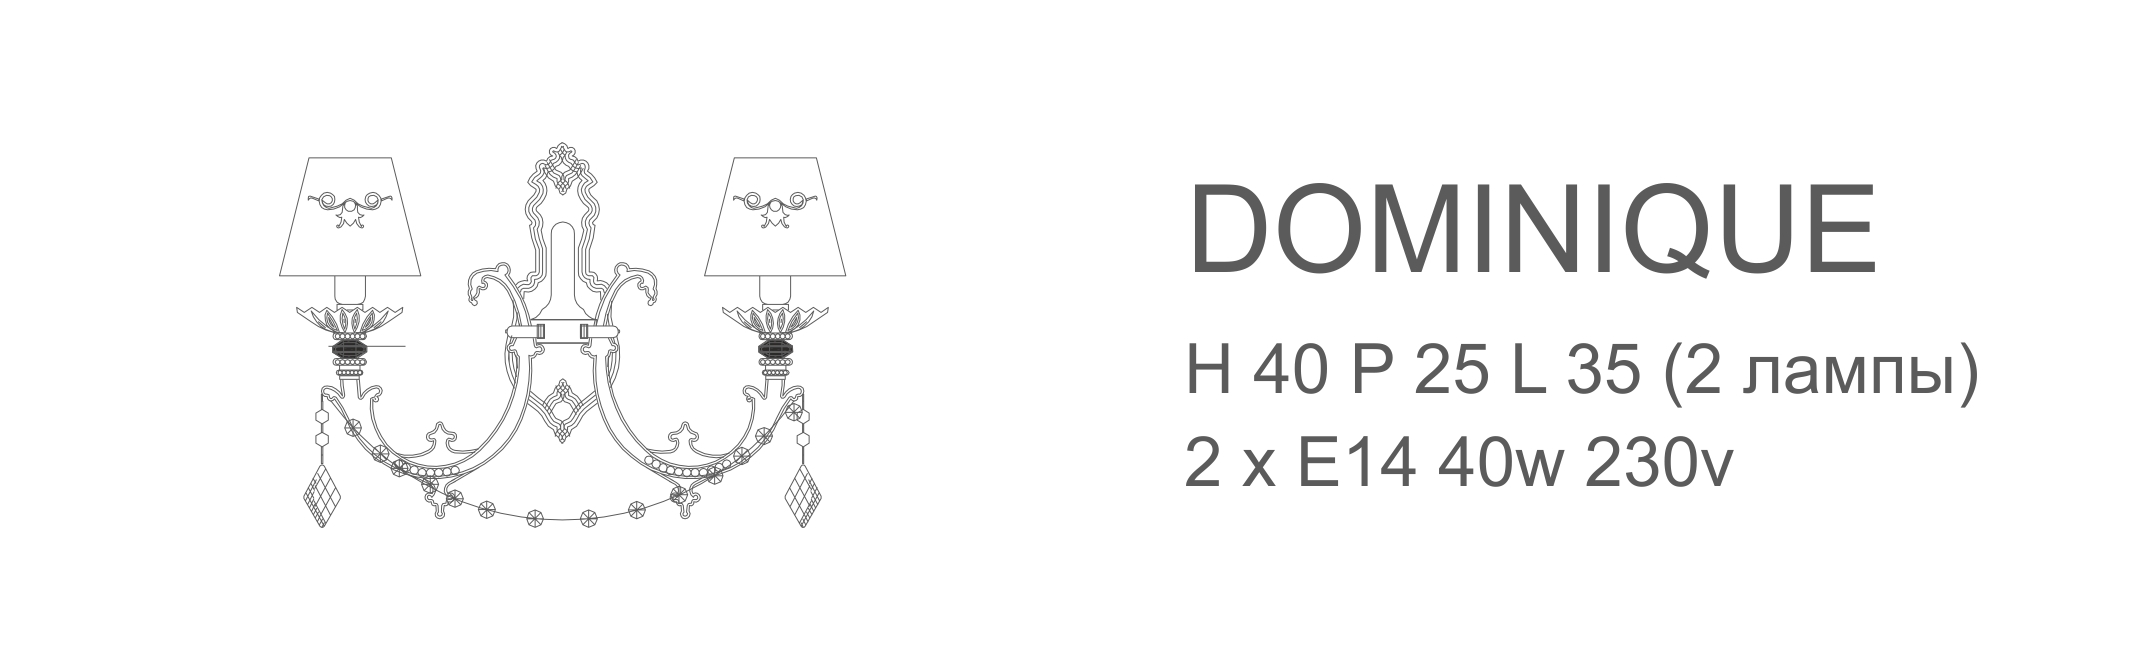 Бра Dominique - 2 лампы